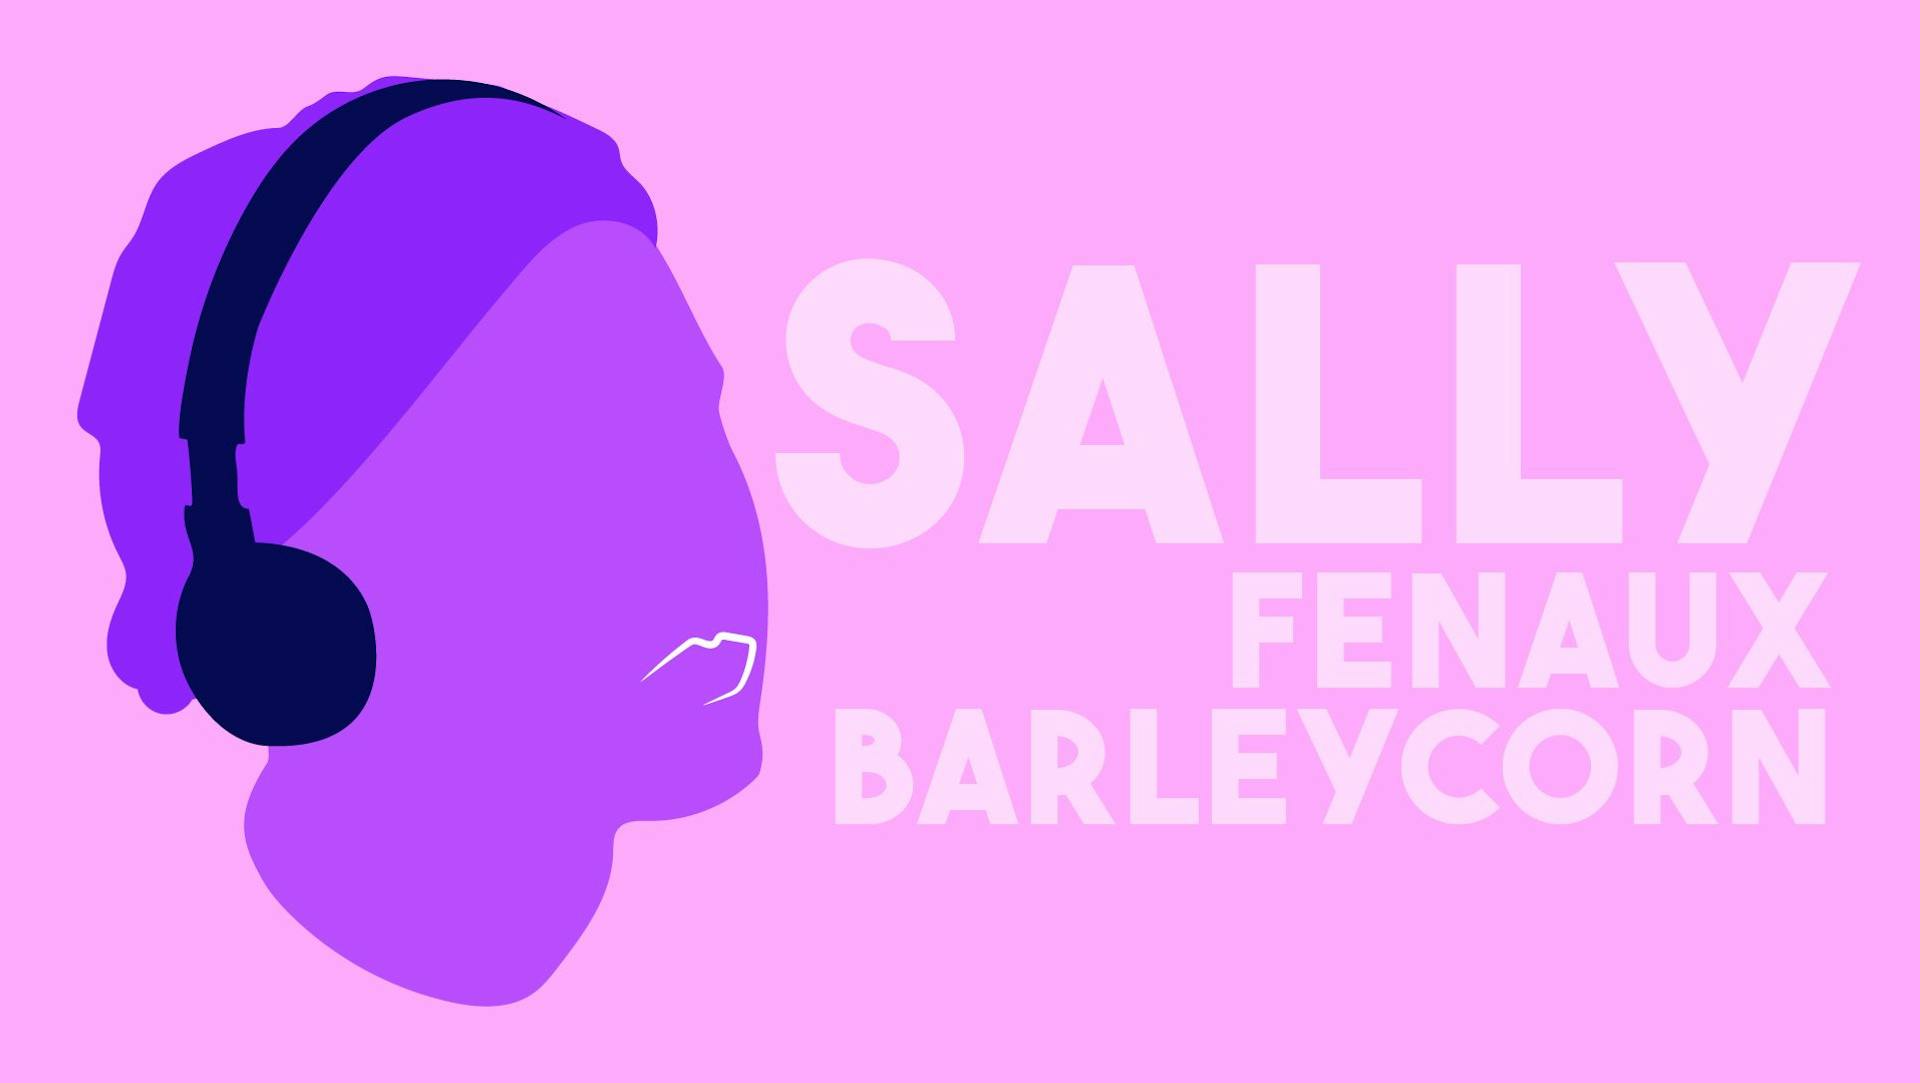 Sally Fenaux Barleycorn - Director Video